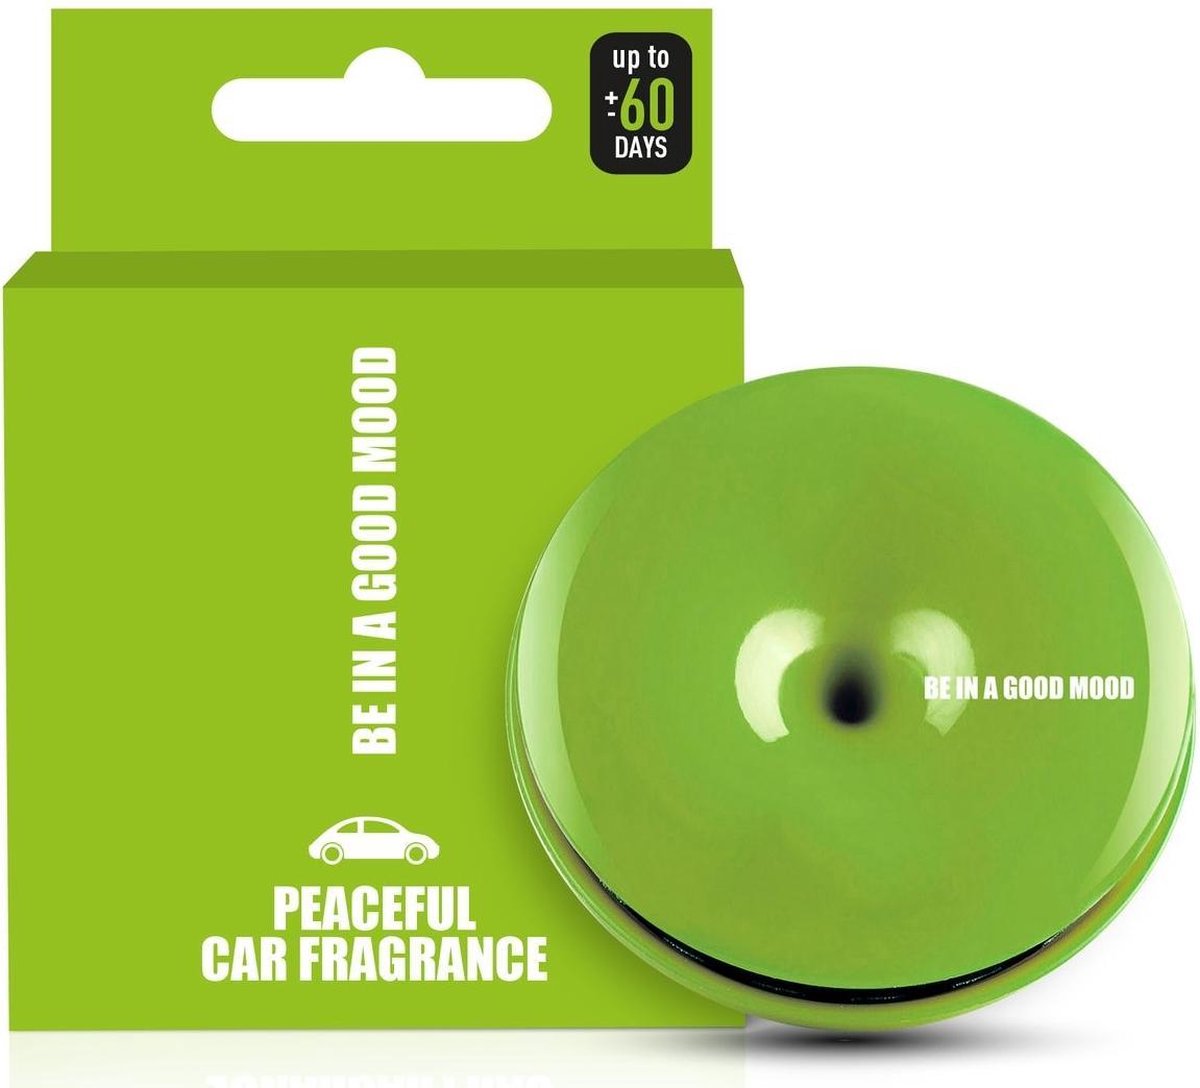 BE IN A GOOD MOOD CAR FRAGRANCES| Etherische oliën | Car Air Freshener met easy-to-use Air Vent Diffuser | Boost Your Mood & Elimineert Onaangename geuren (Peaceful)